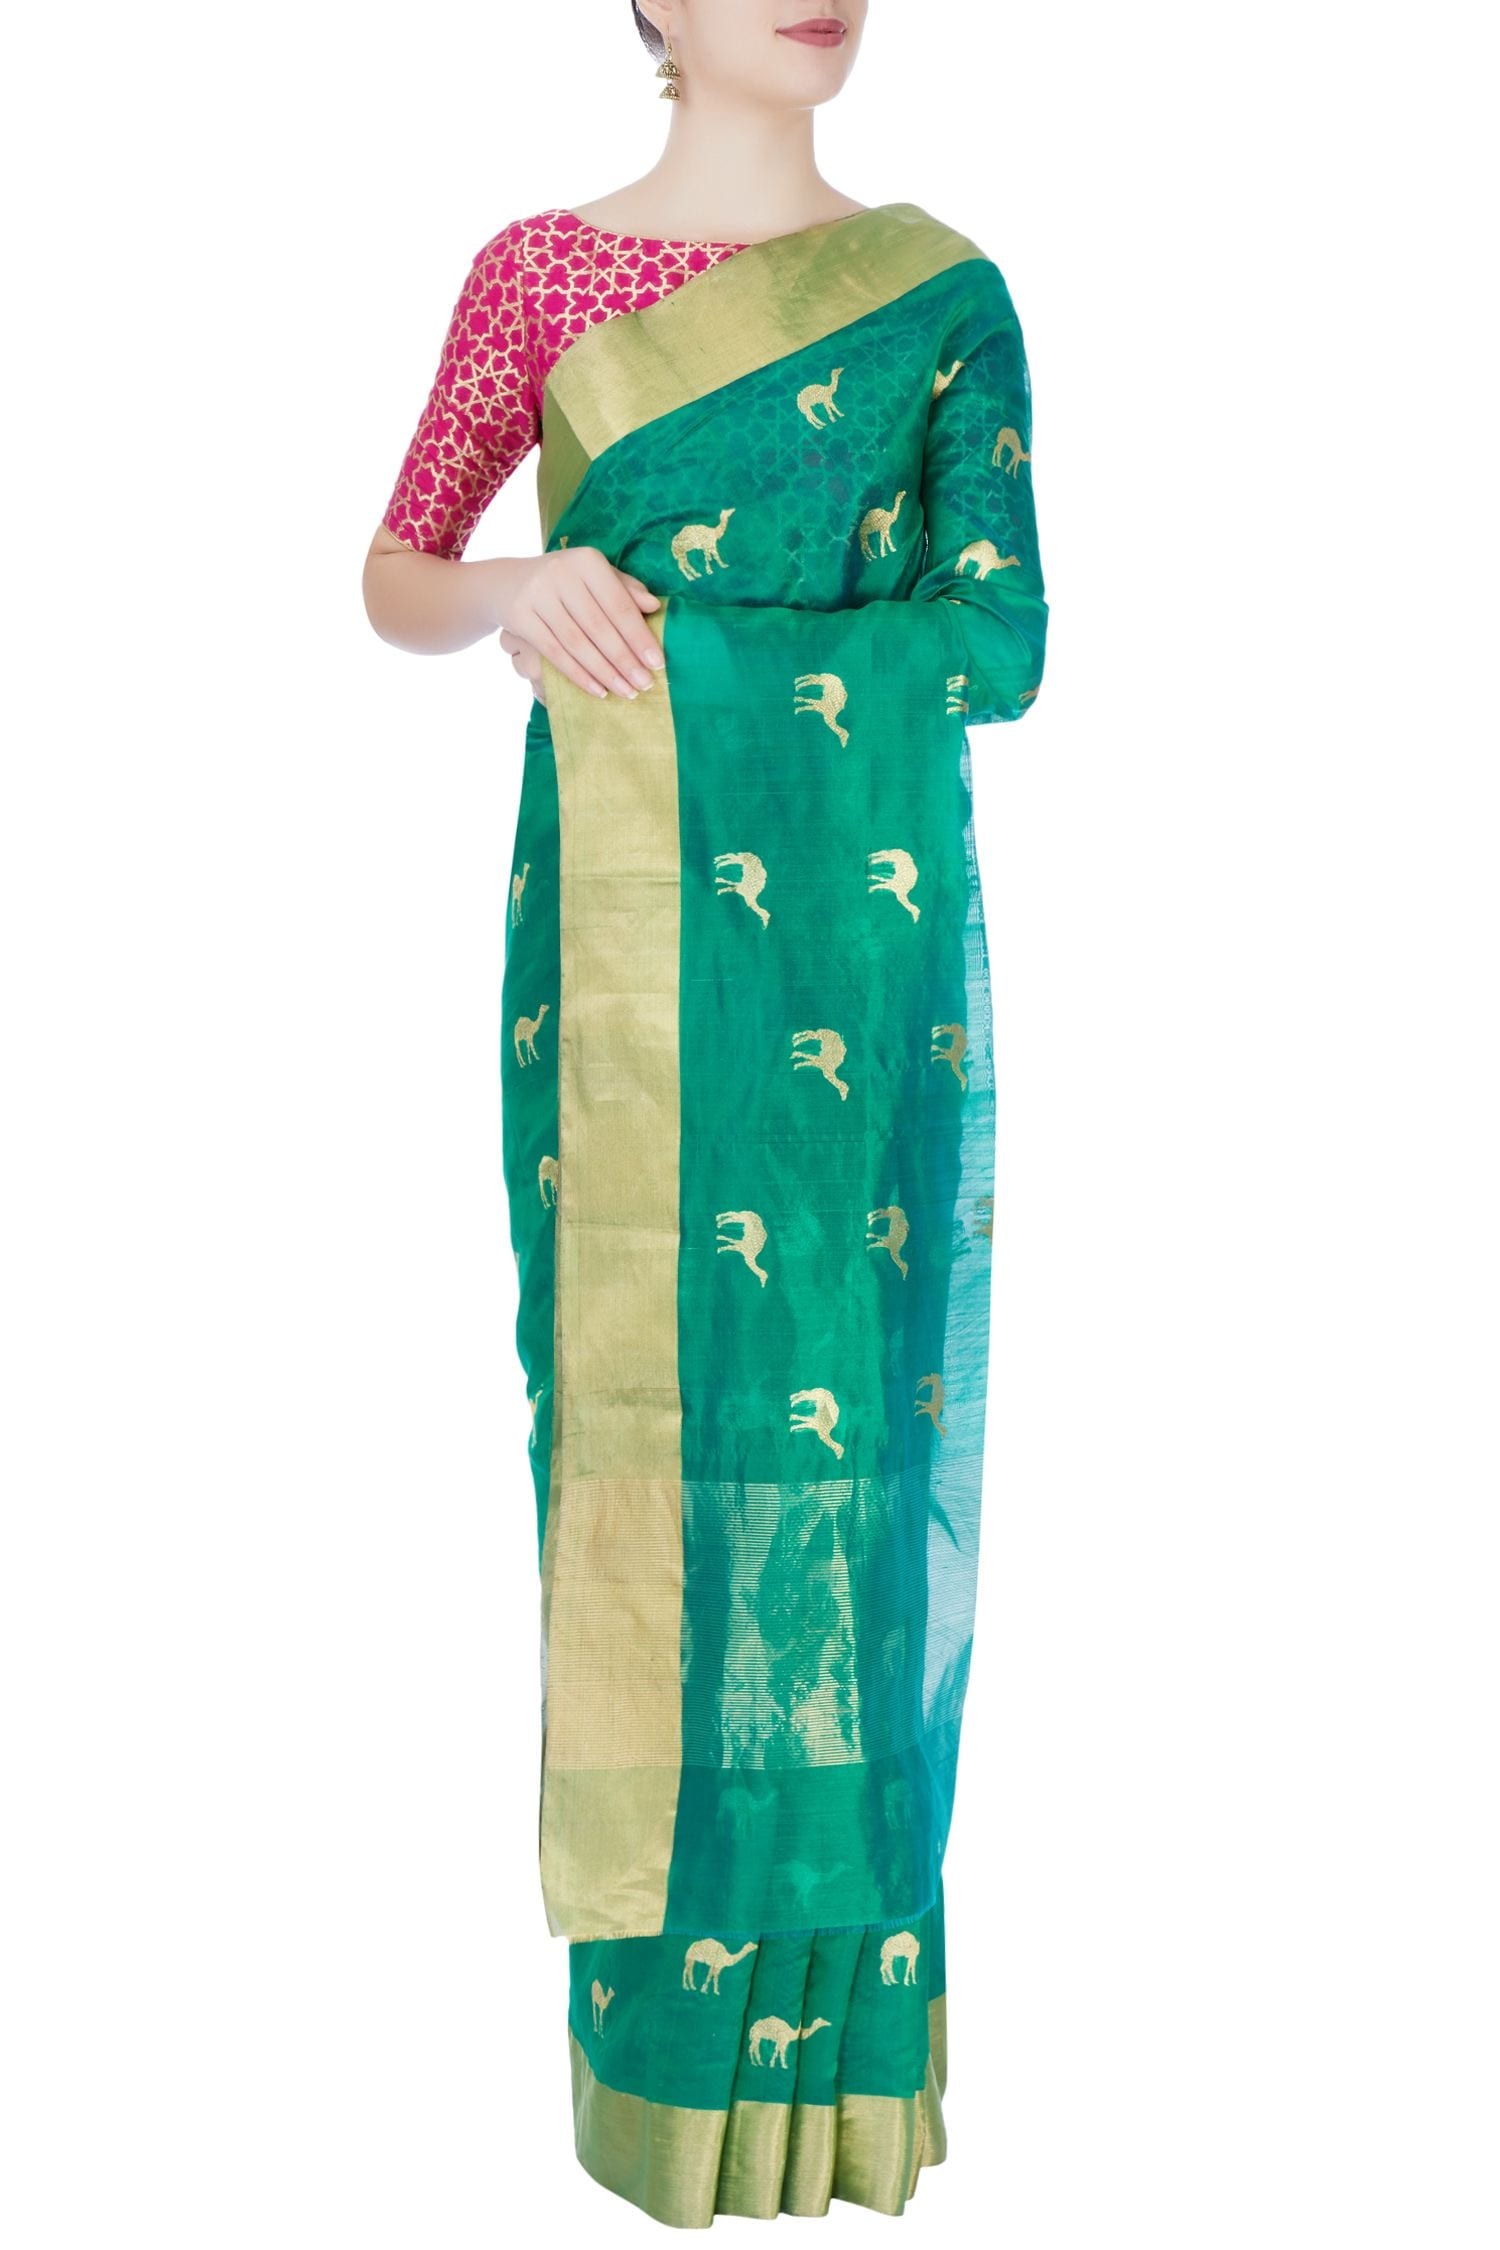 Buy Shamrock green mulberry silk saree by Sailesh Singhania at Aza Fashions